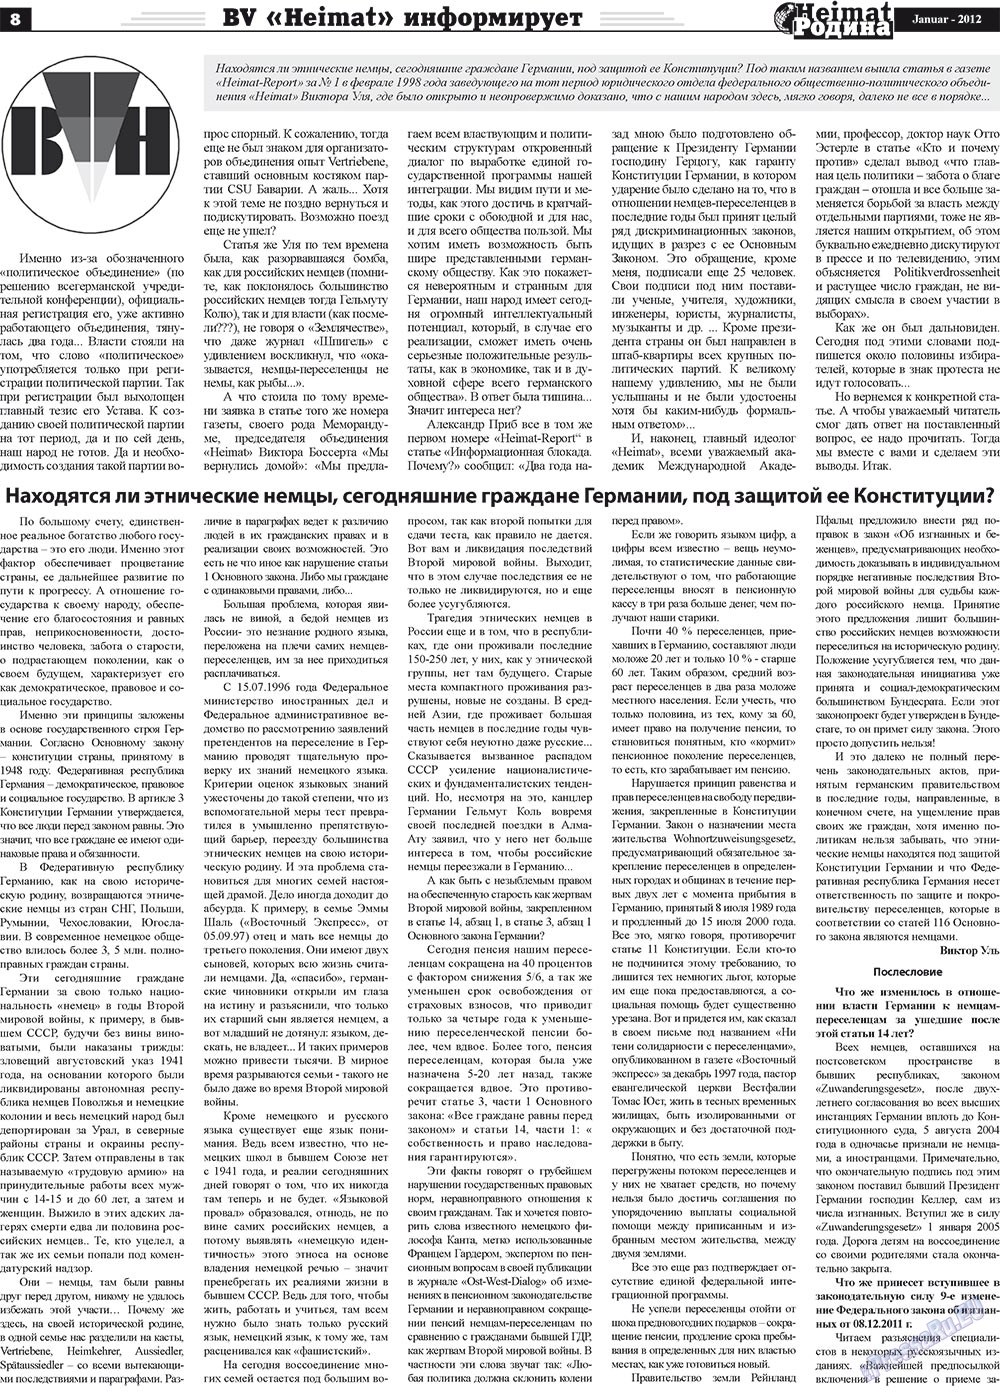 Heimat-Родина, газета. 2012 №1 стр.8